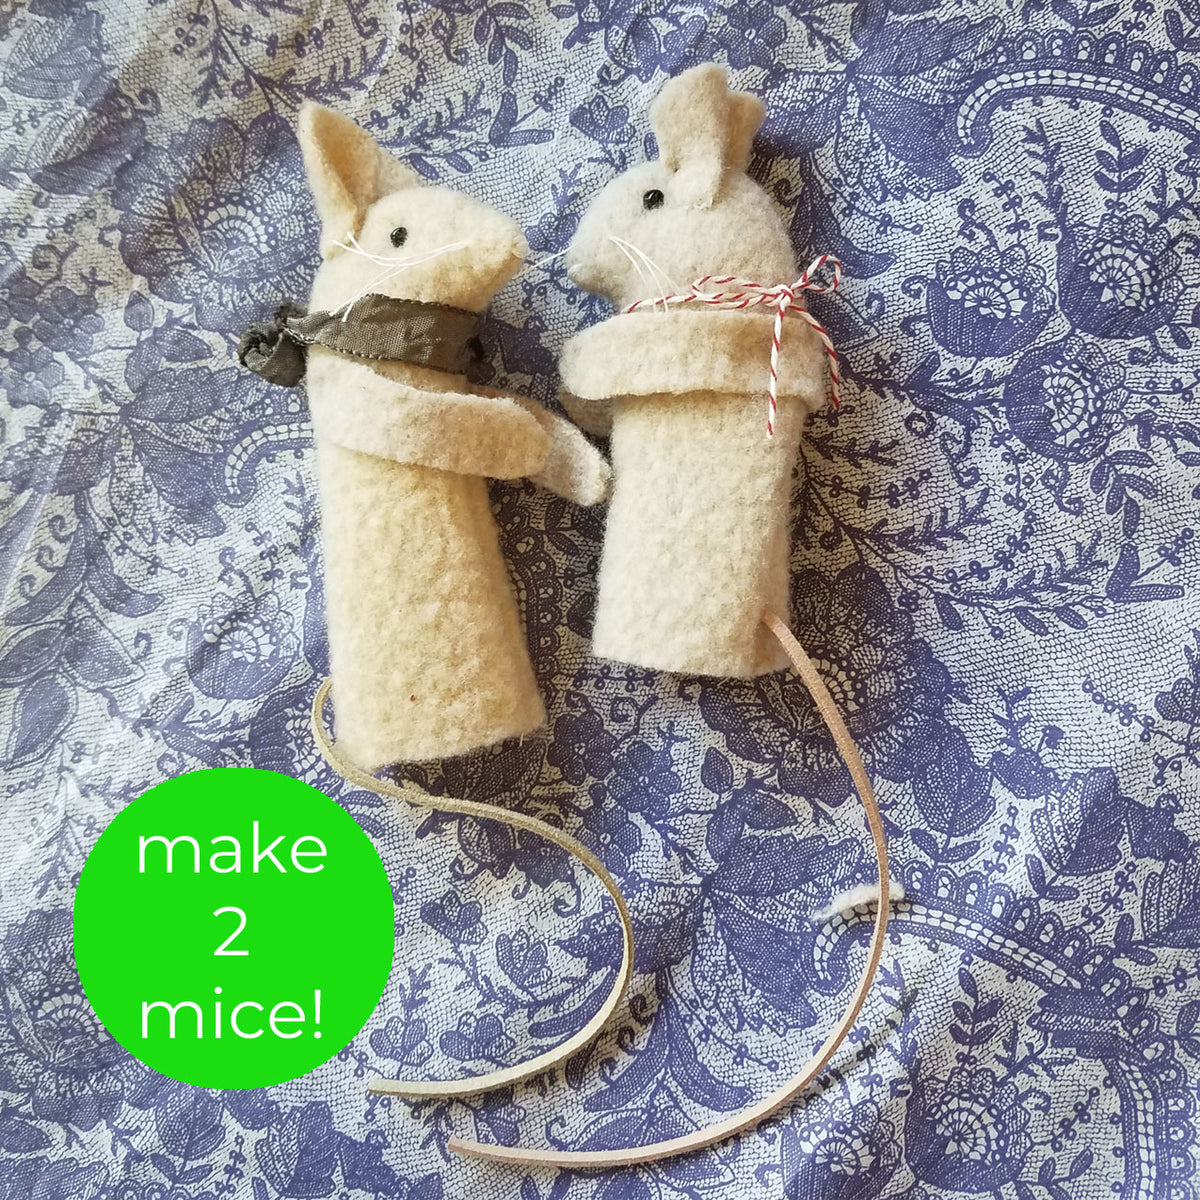 Mice Needle Felting Kit - Starter Kit